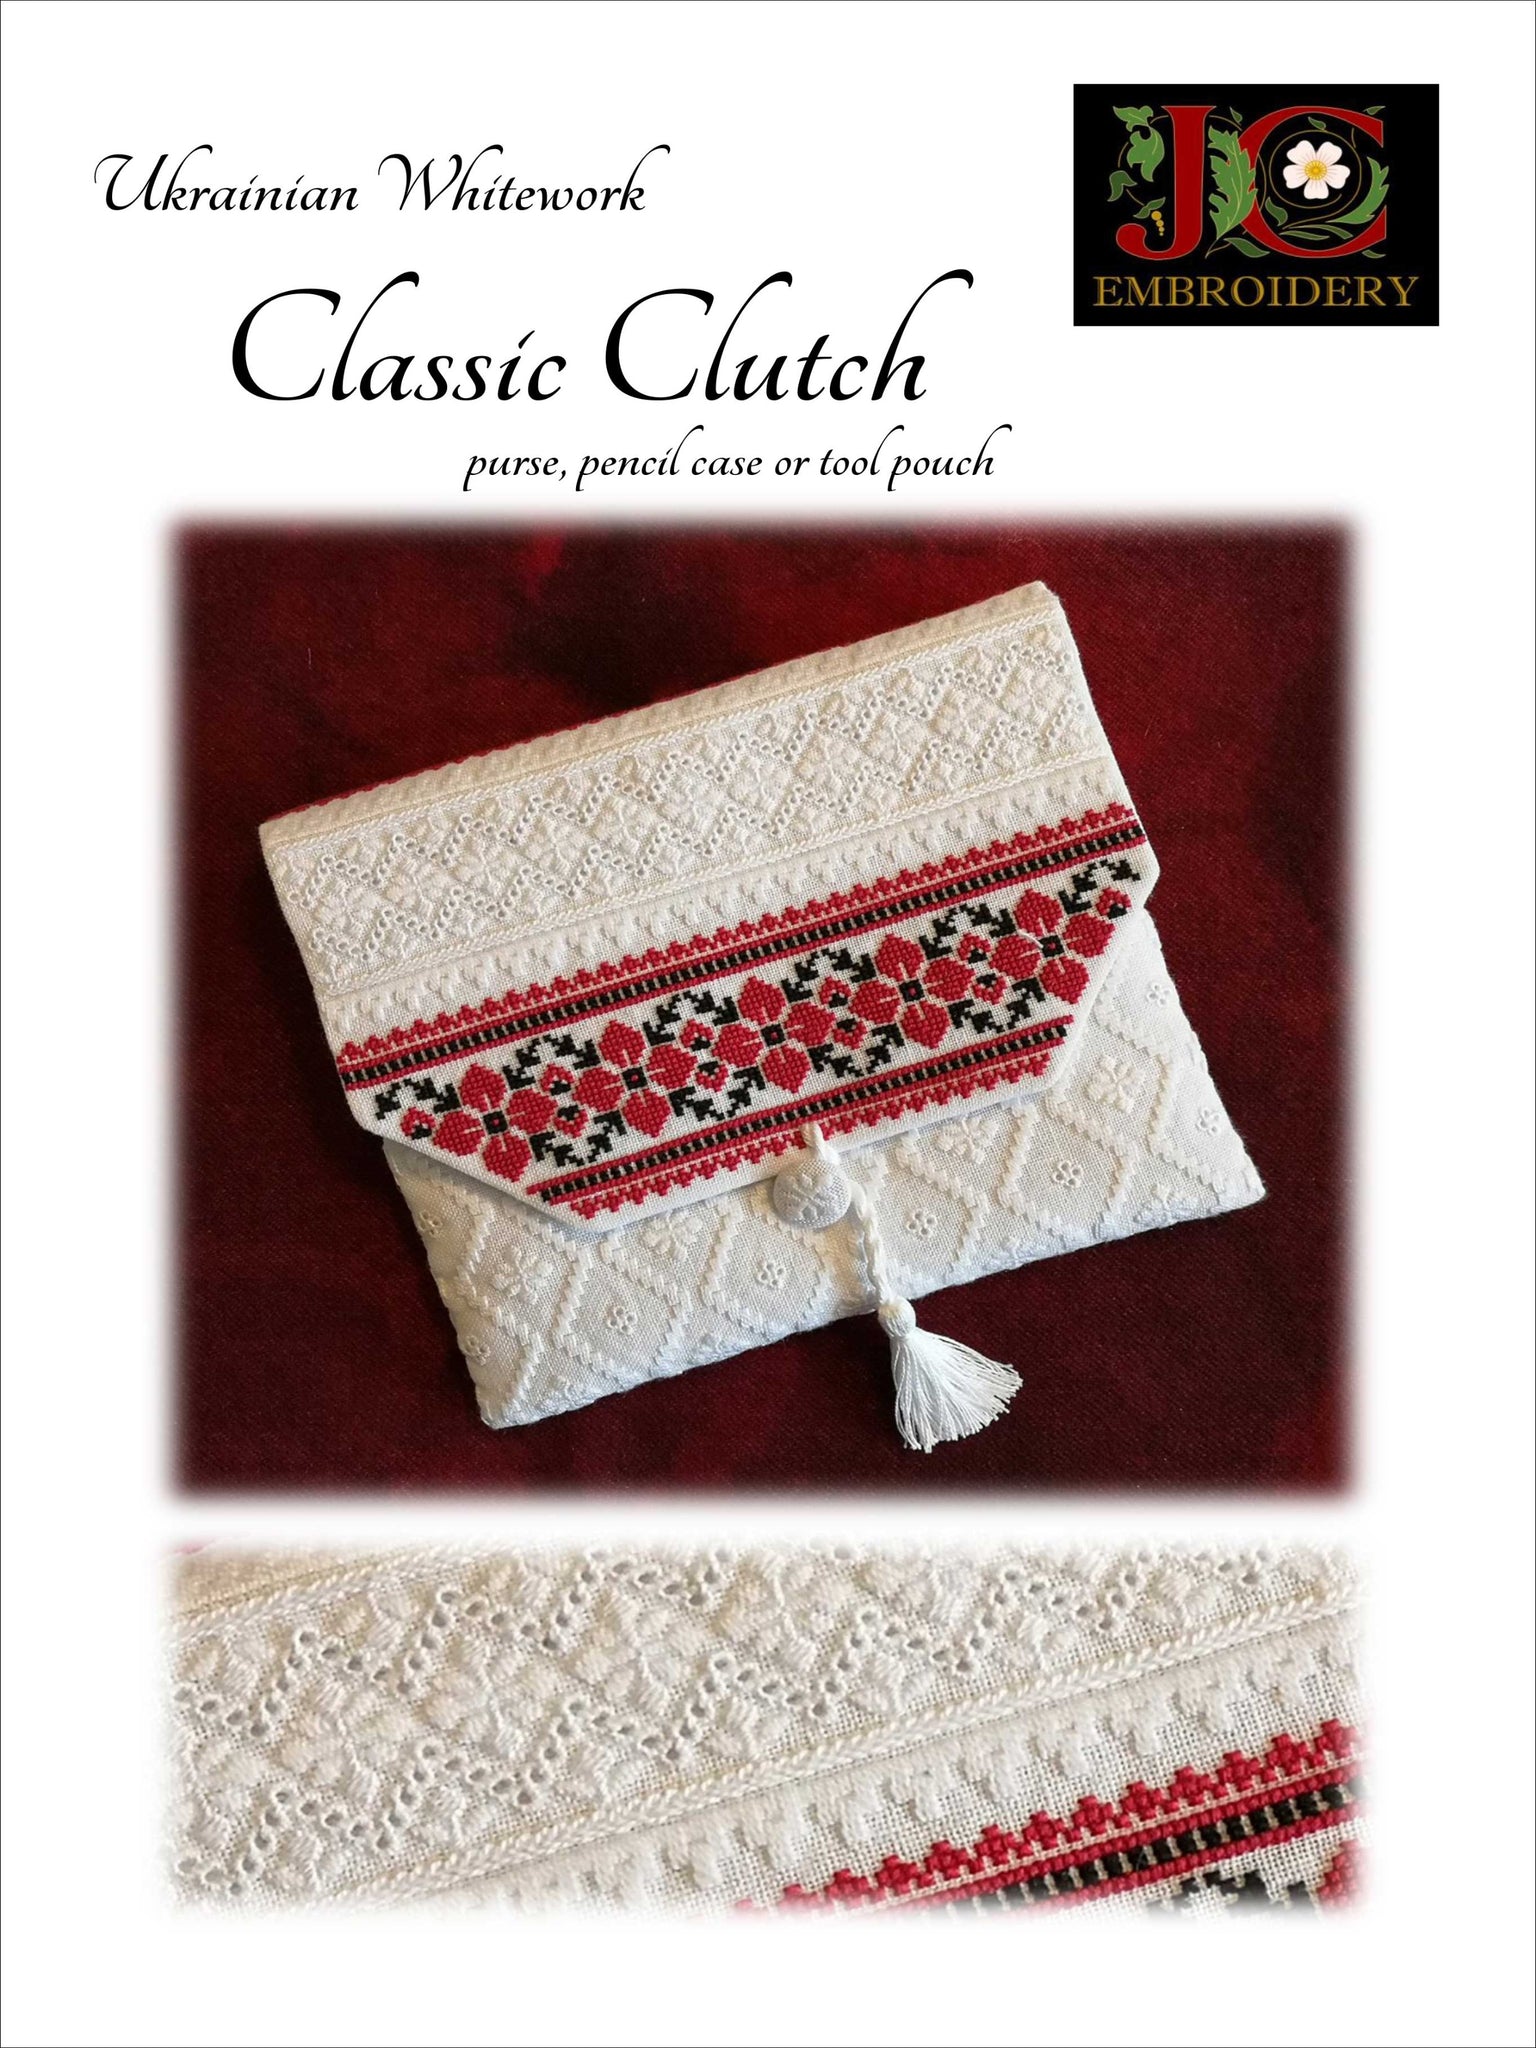 Classic Clutch - Ukrainian Whitework